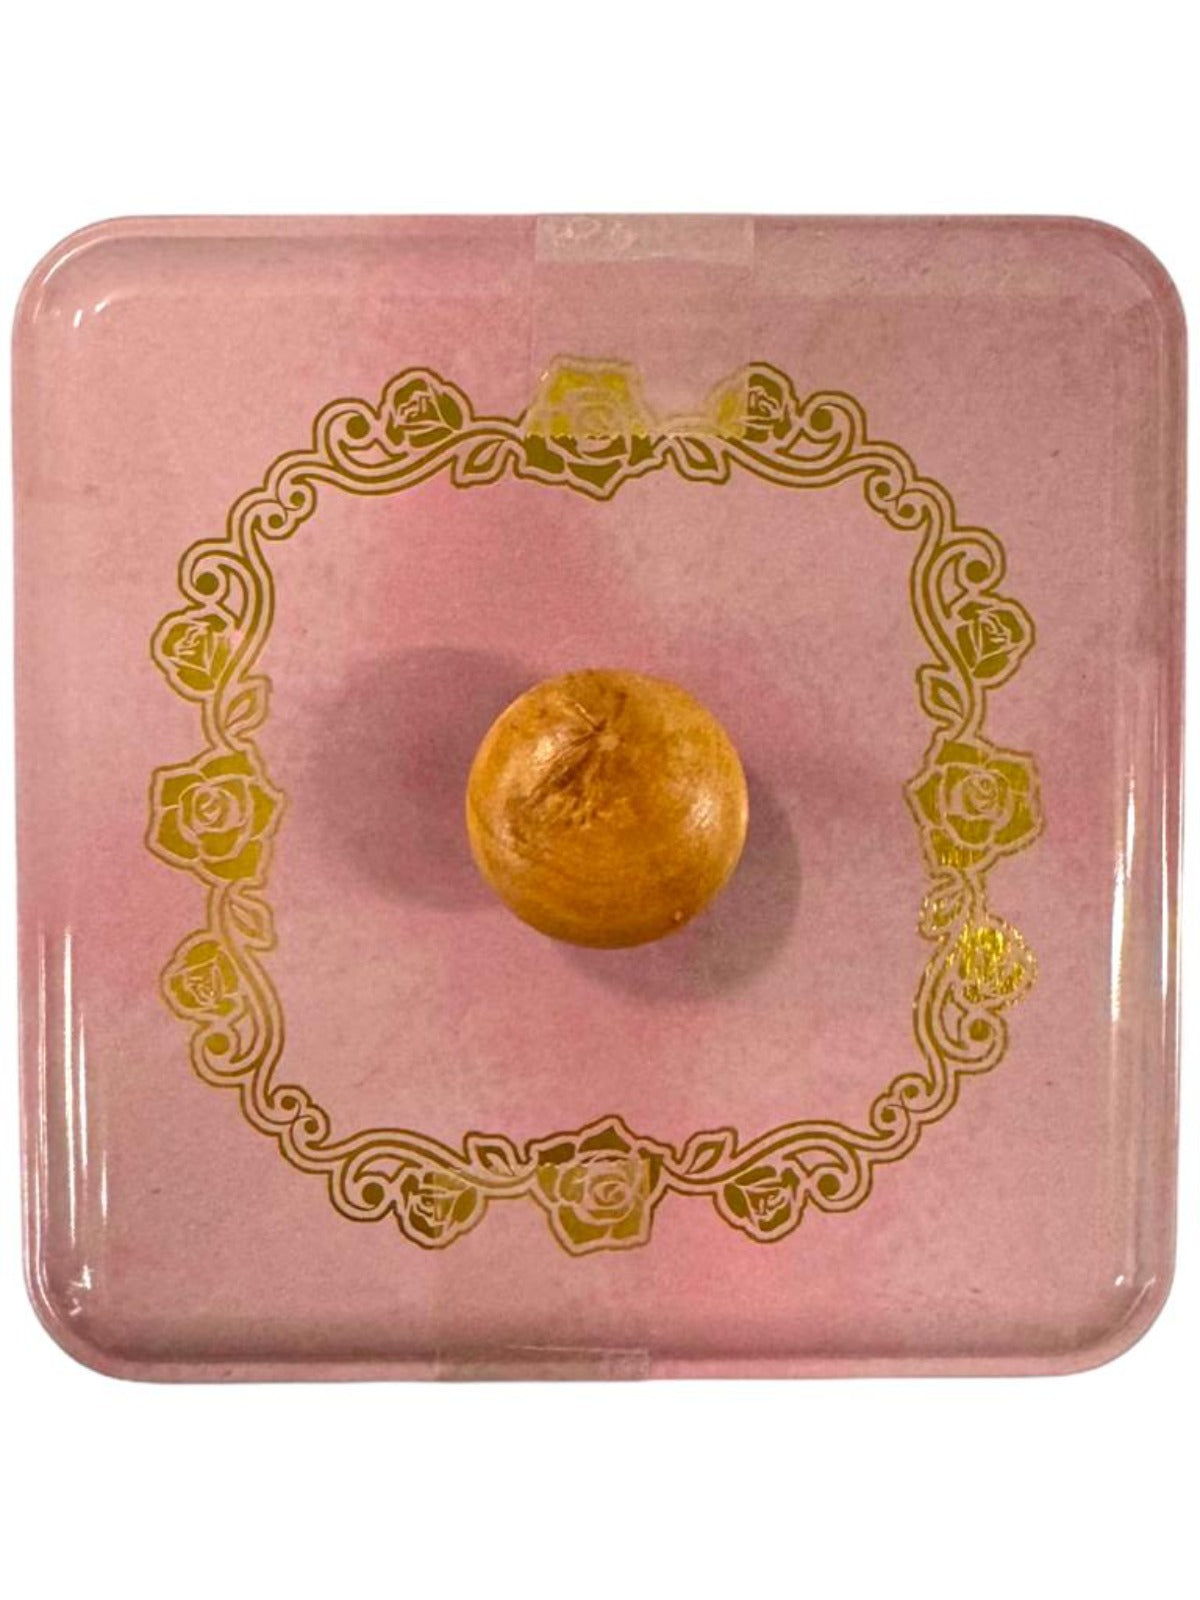 Marie Ange di Costa Flower Fairy Italian Butter Cookies—Il Pomello in Rose 150g